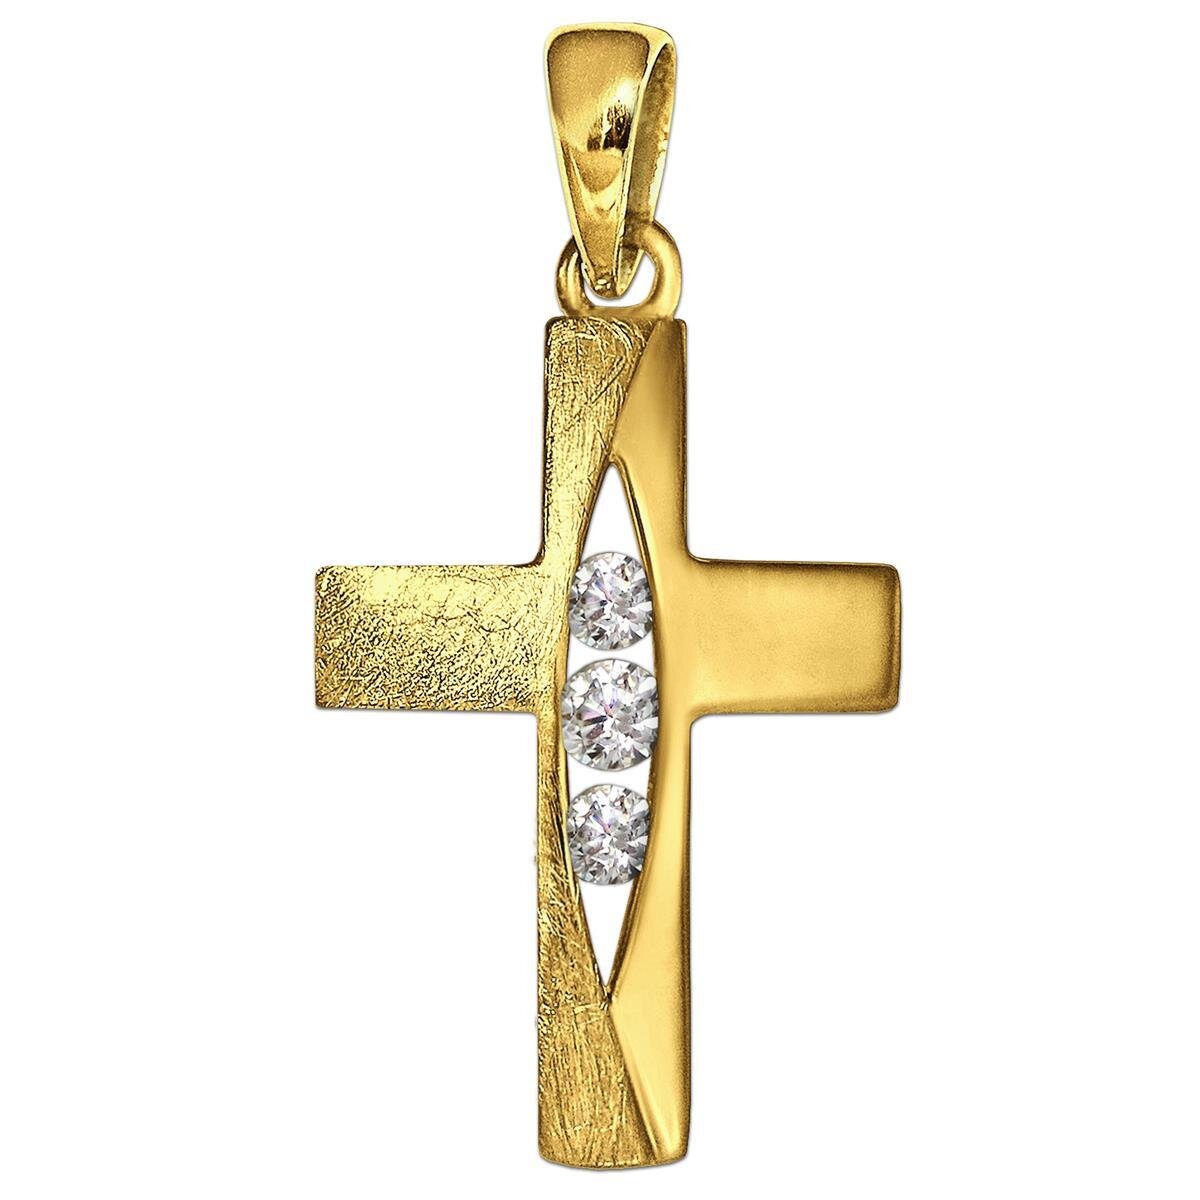 Goldenes Kreuz 16 mm mit 3 Zirkonia glänzend matt gemustert 333 Gold